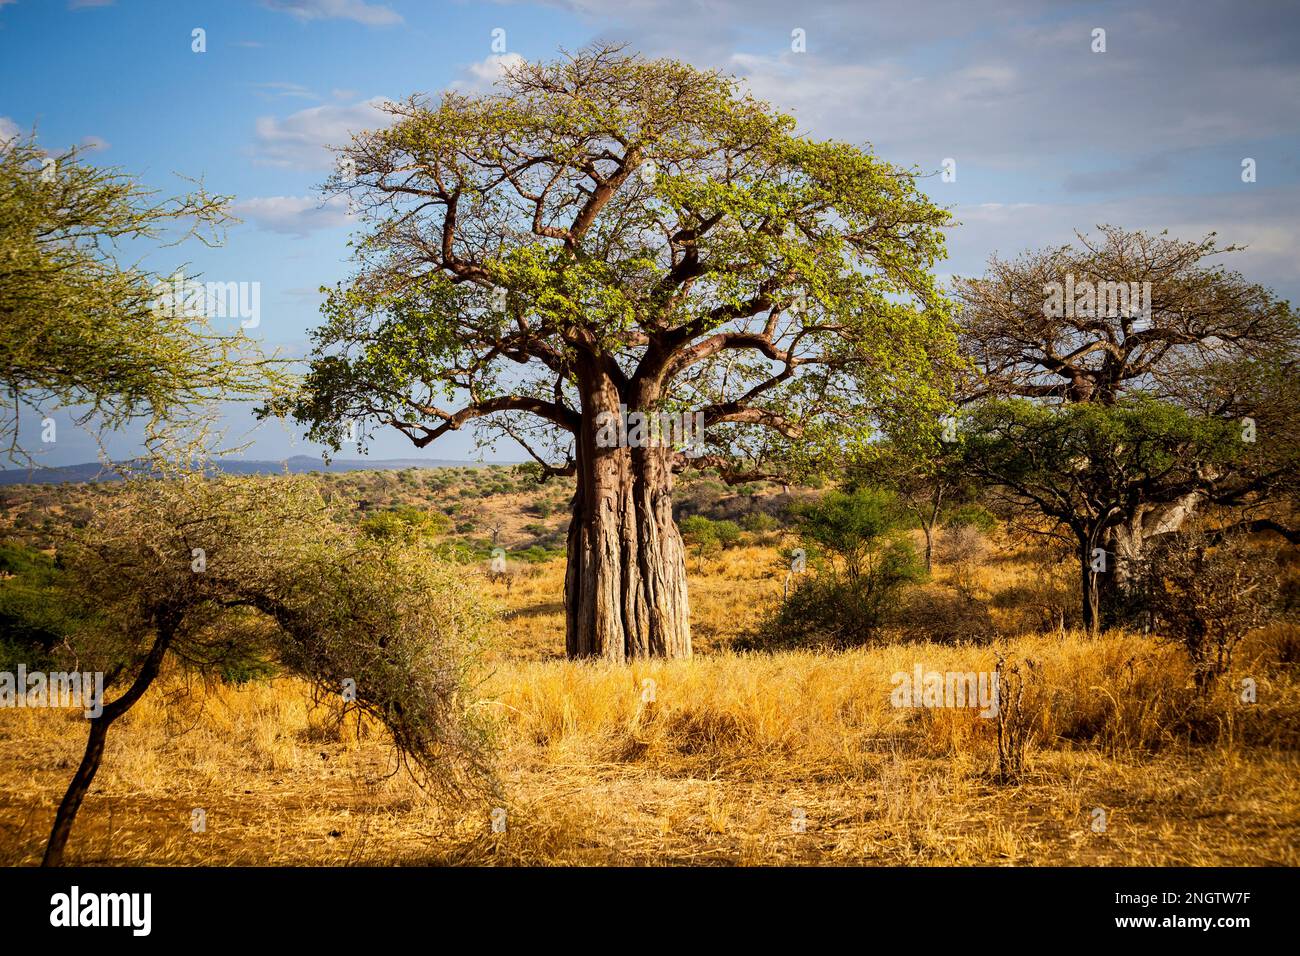 Old Baobab Tree, africa, tansania Stock Photo